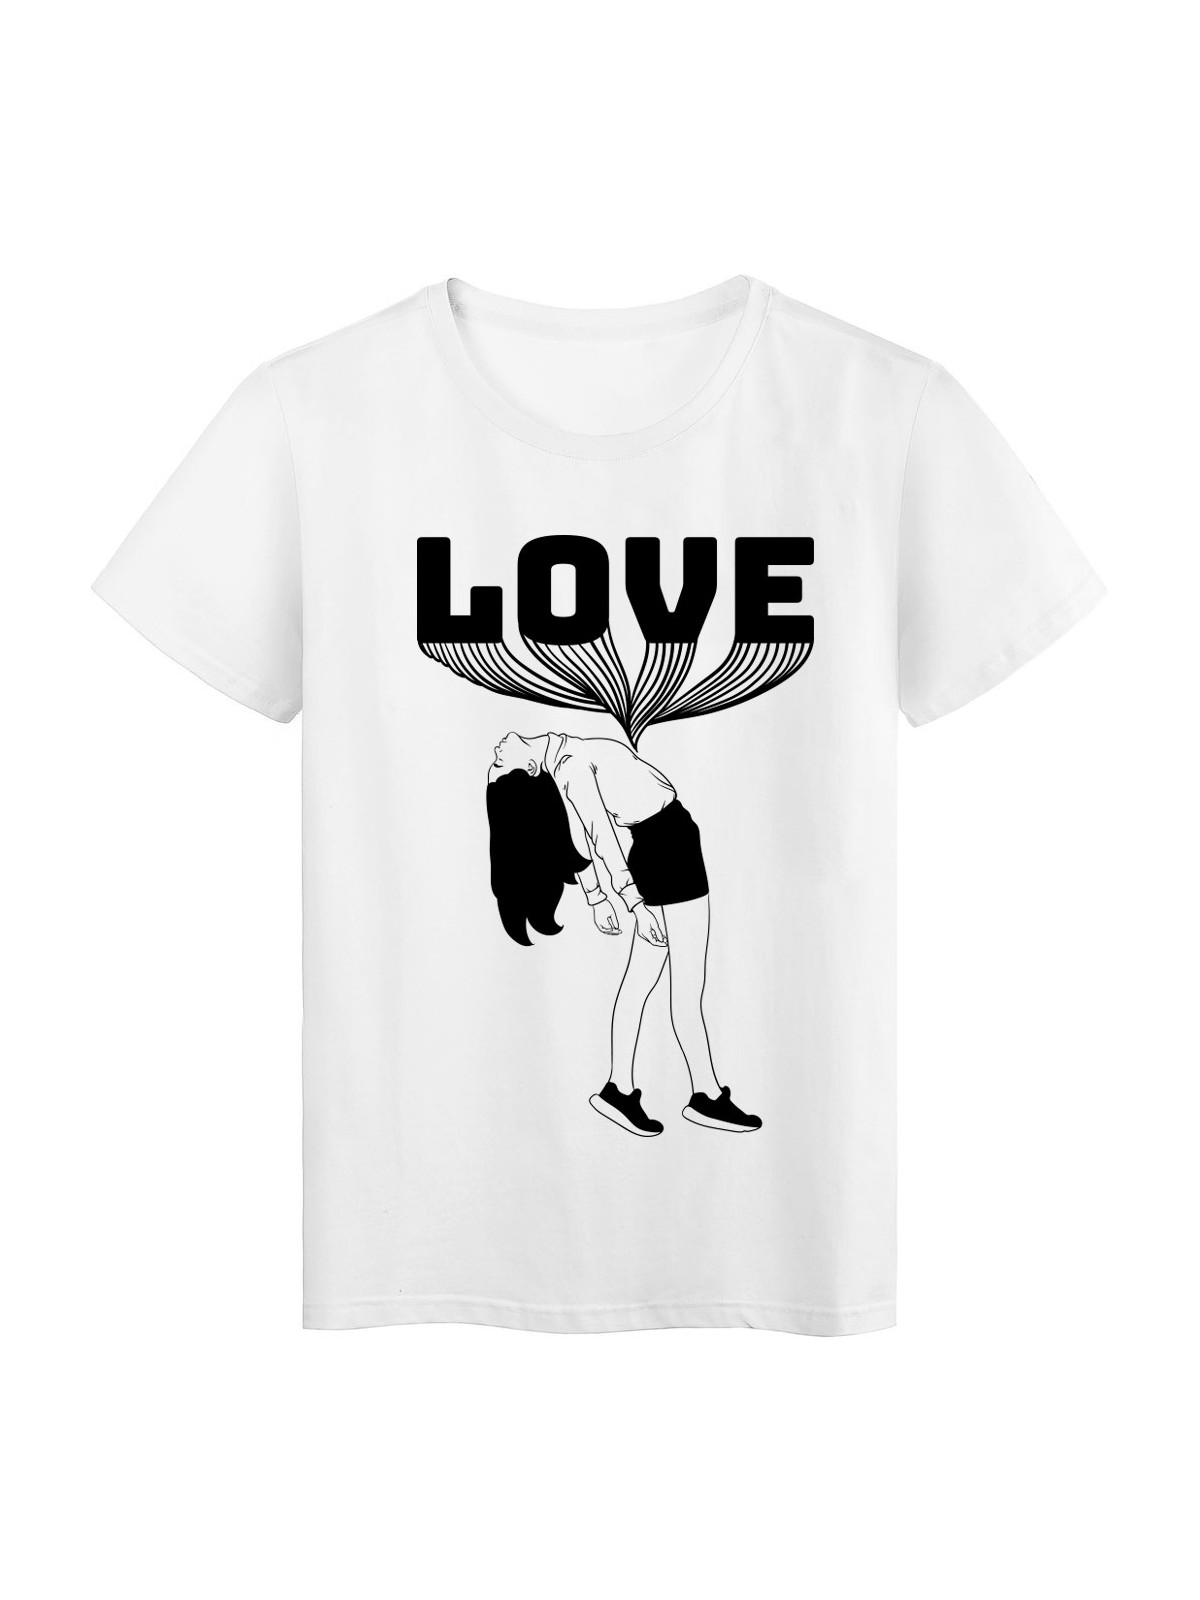 T-Shirt blanc femme noir et blanc love rÃ©f Tee shirt 2155